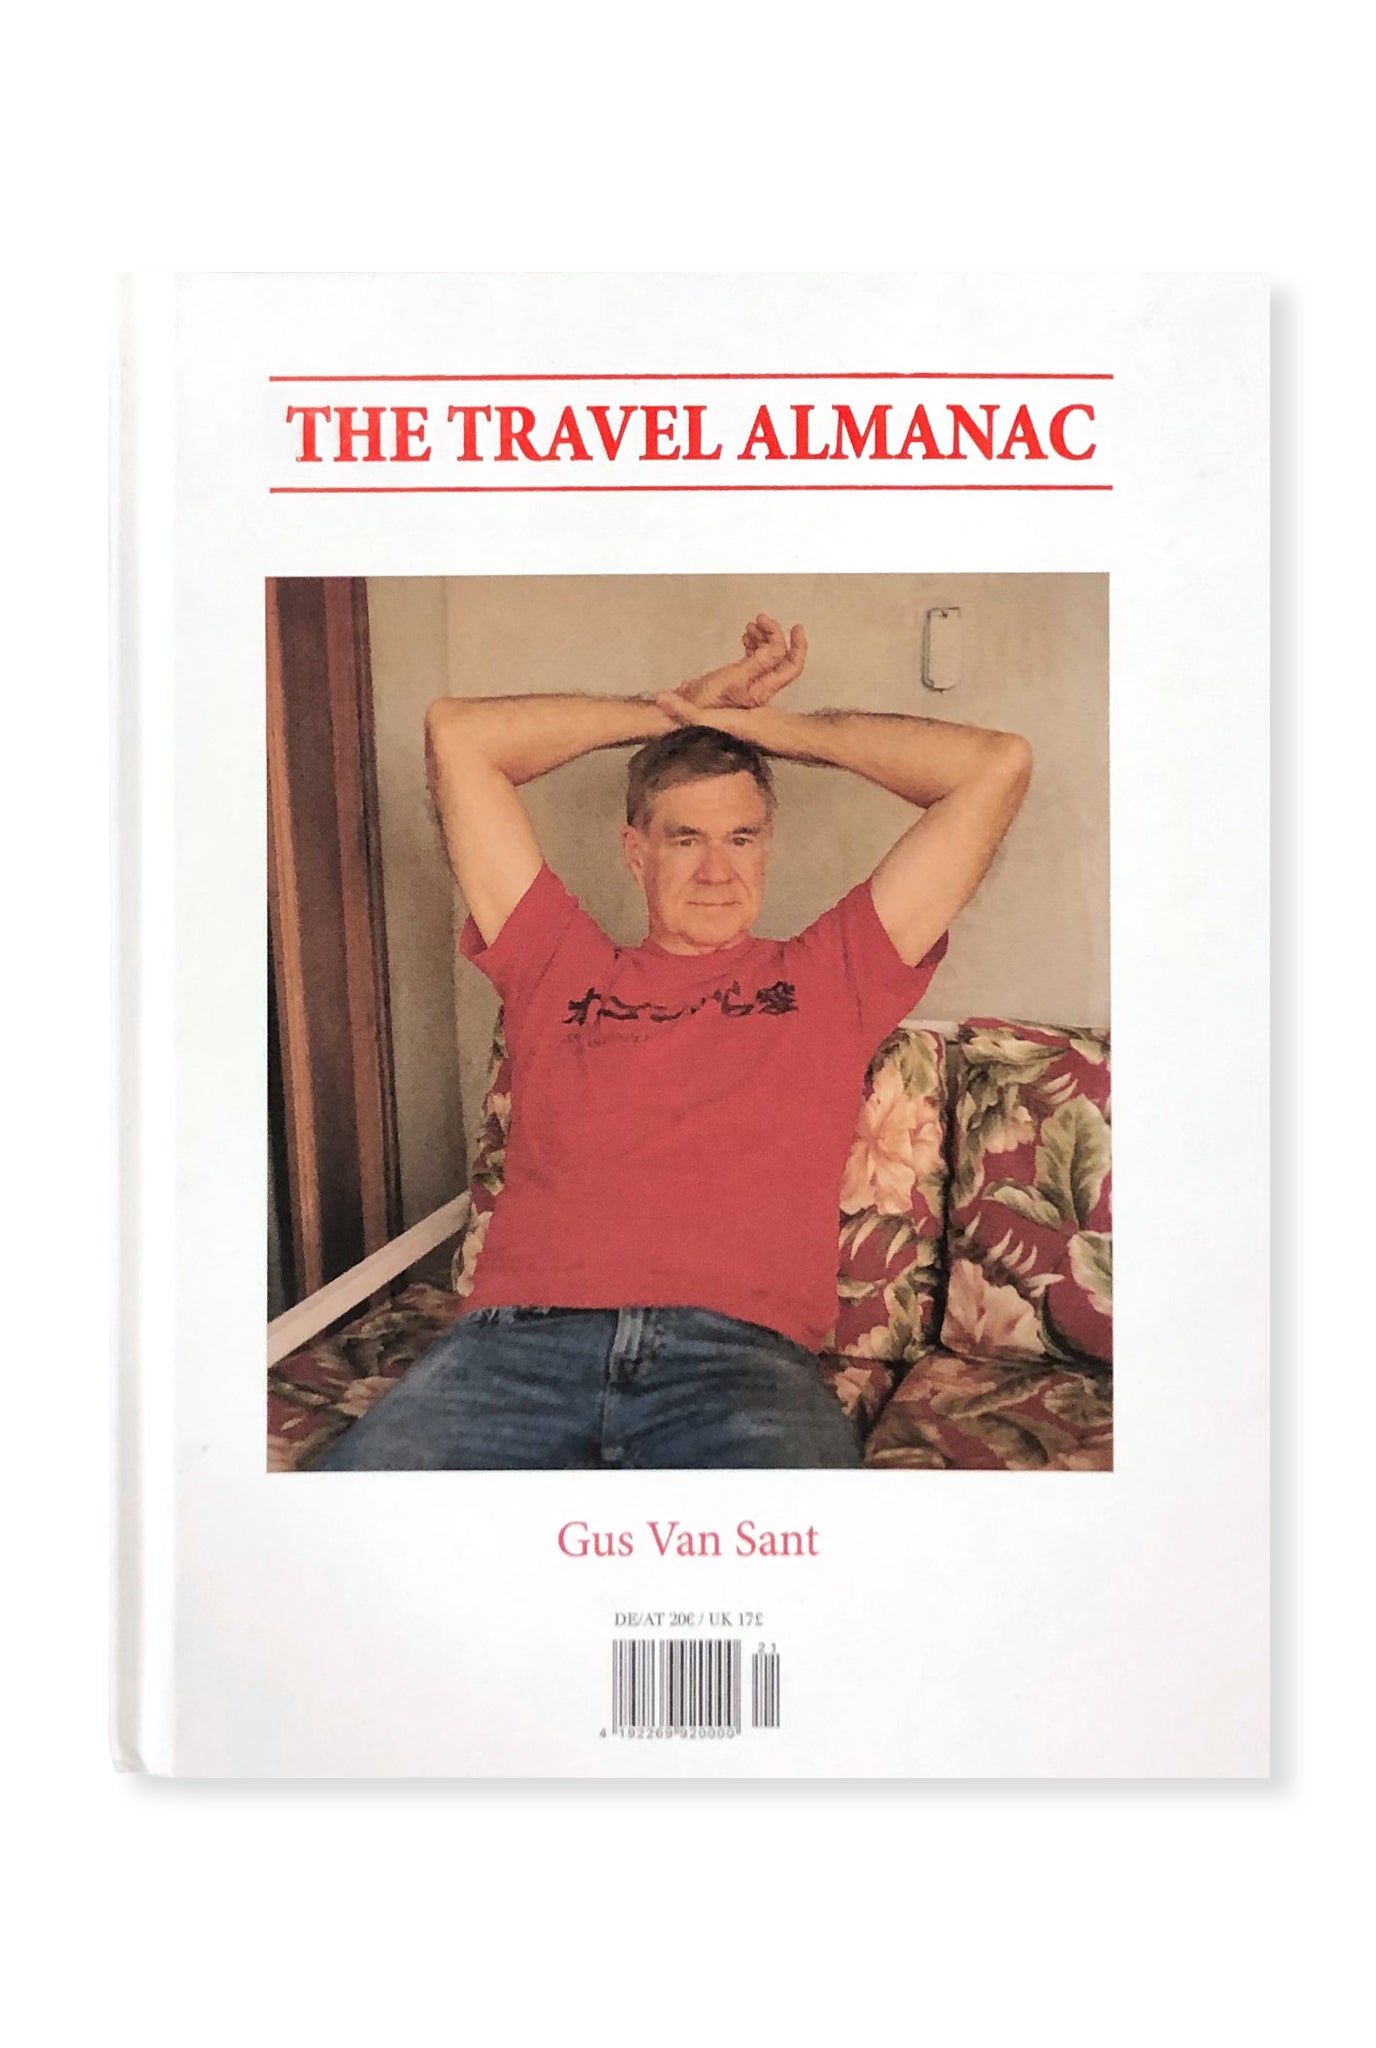 The Travel Almanac, Issue 21